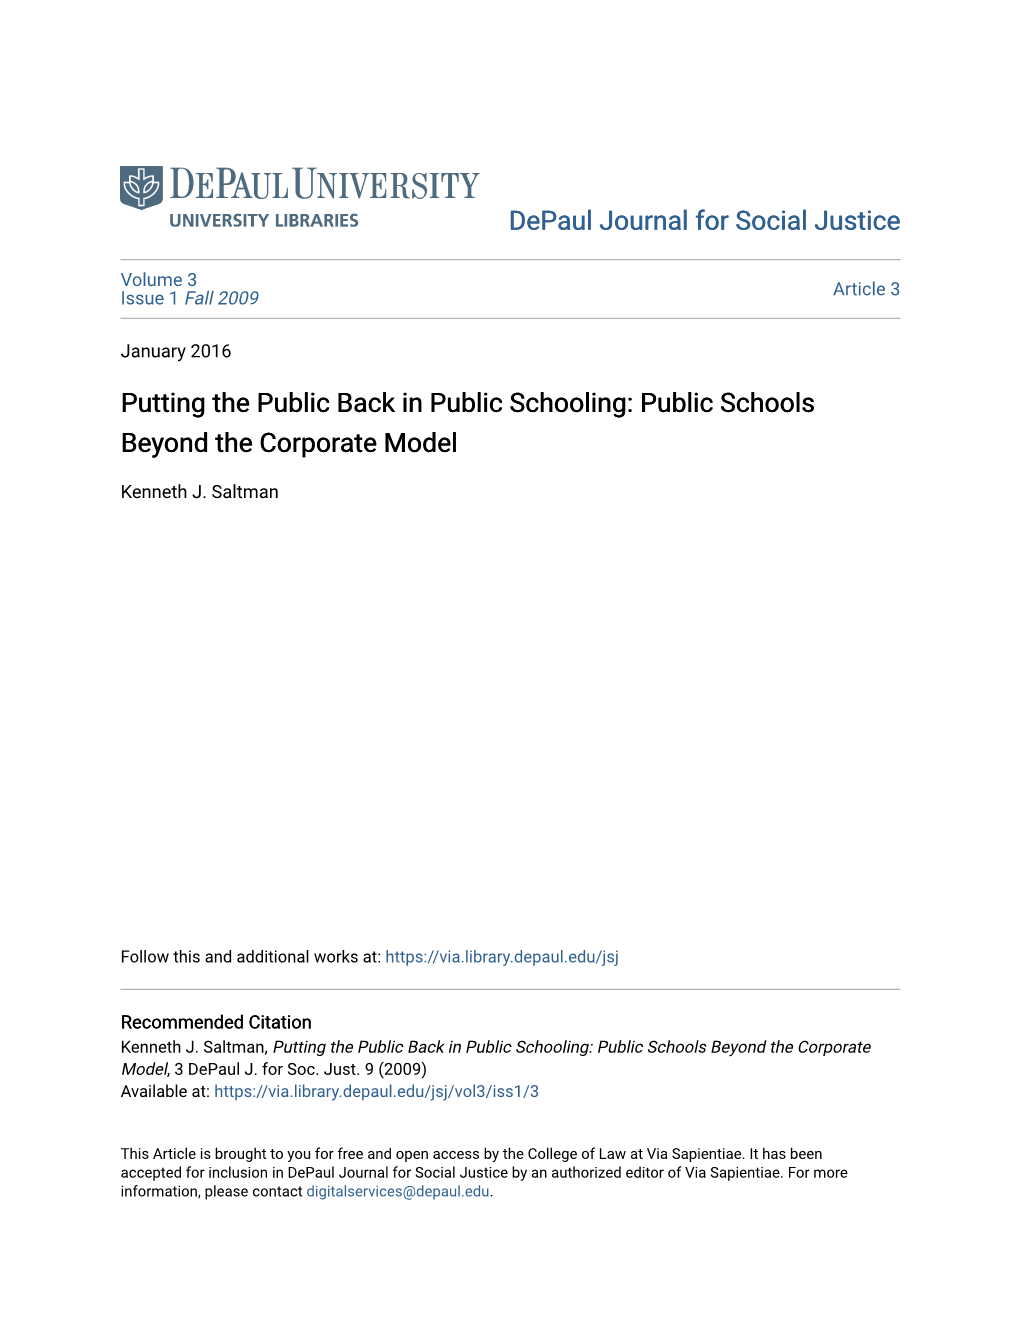 Public Schools Beyond the Corporate Model